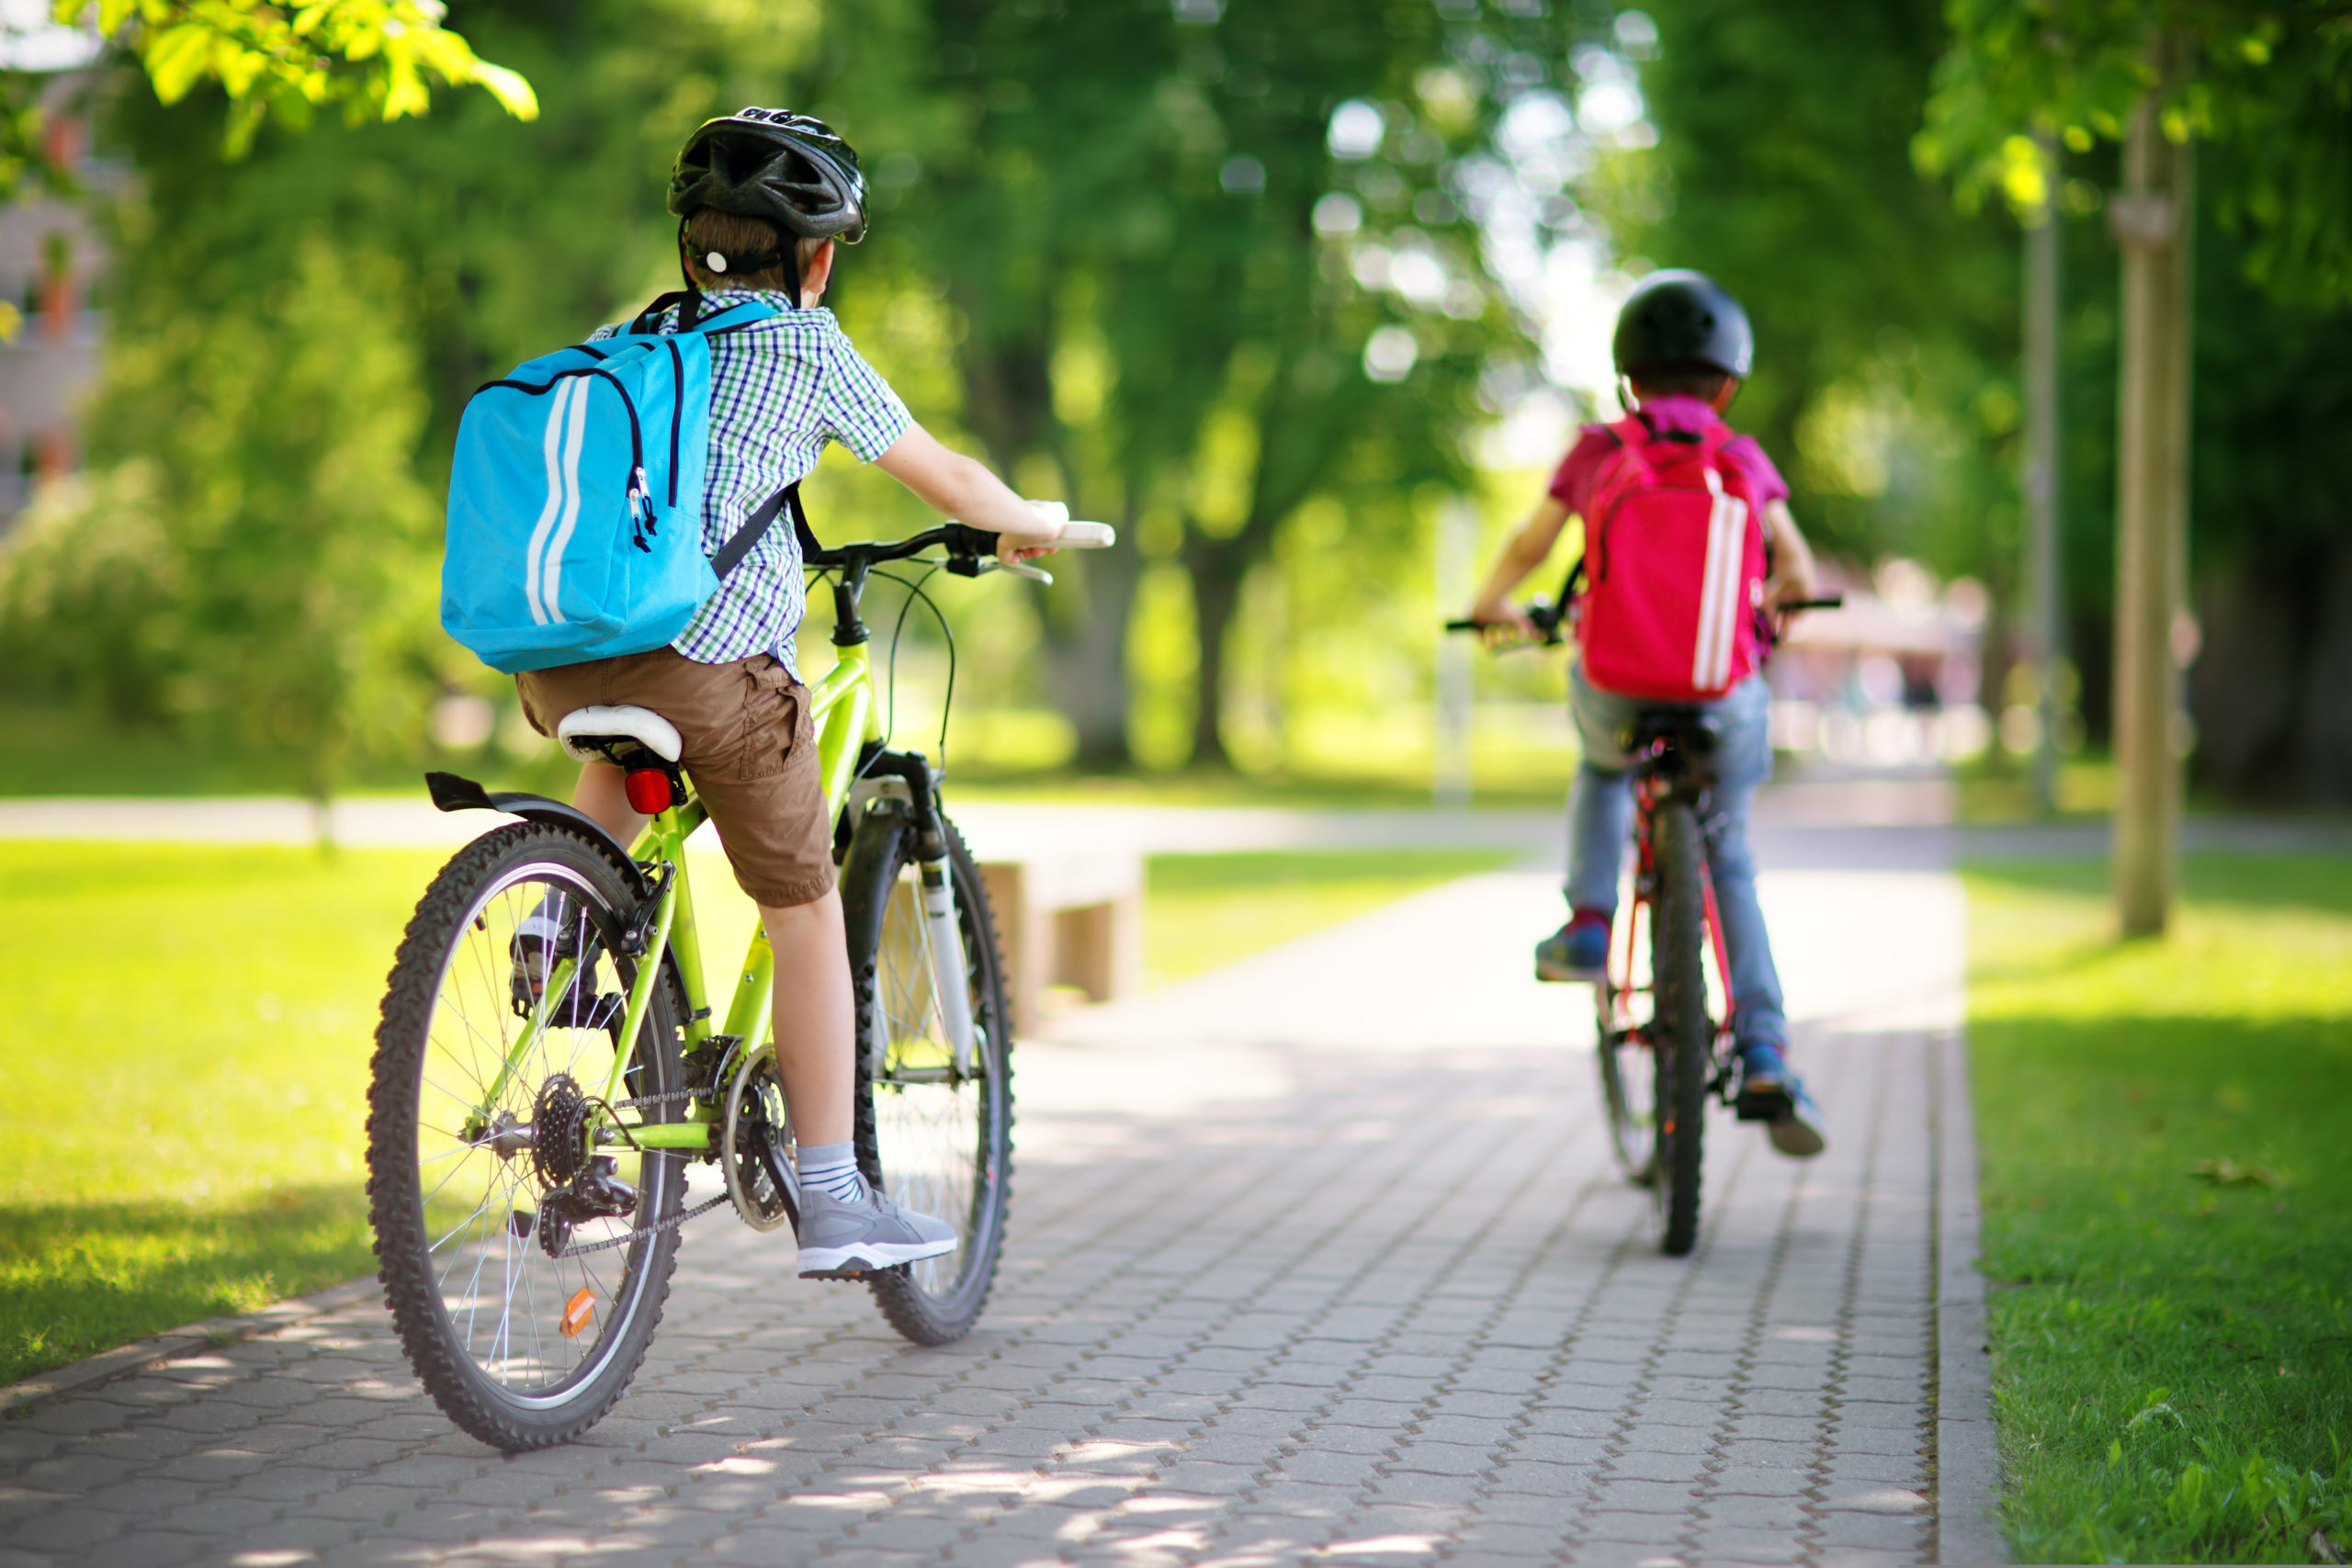 The children are riding bikes. Дети с велосипедом. Велосипед школьник. Ребенок на велосипеде со спины. Подросток на велосипеде.